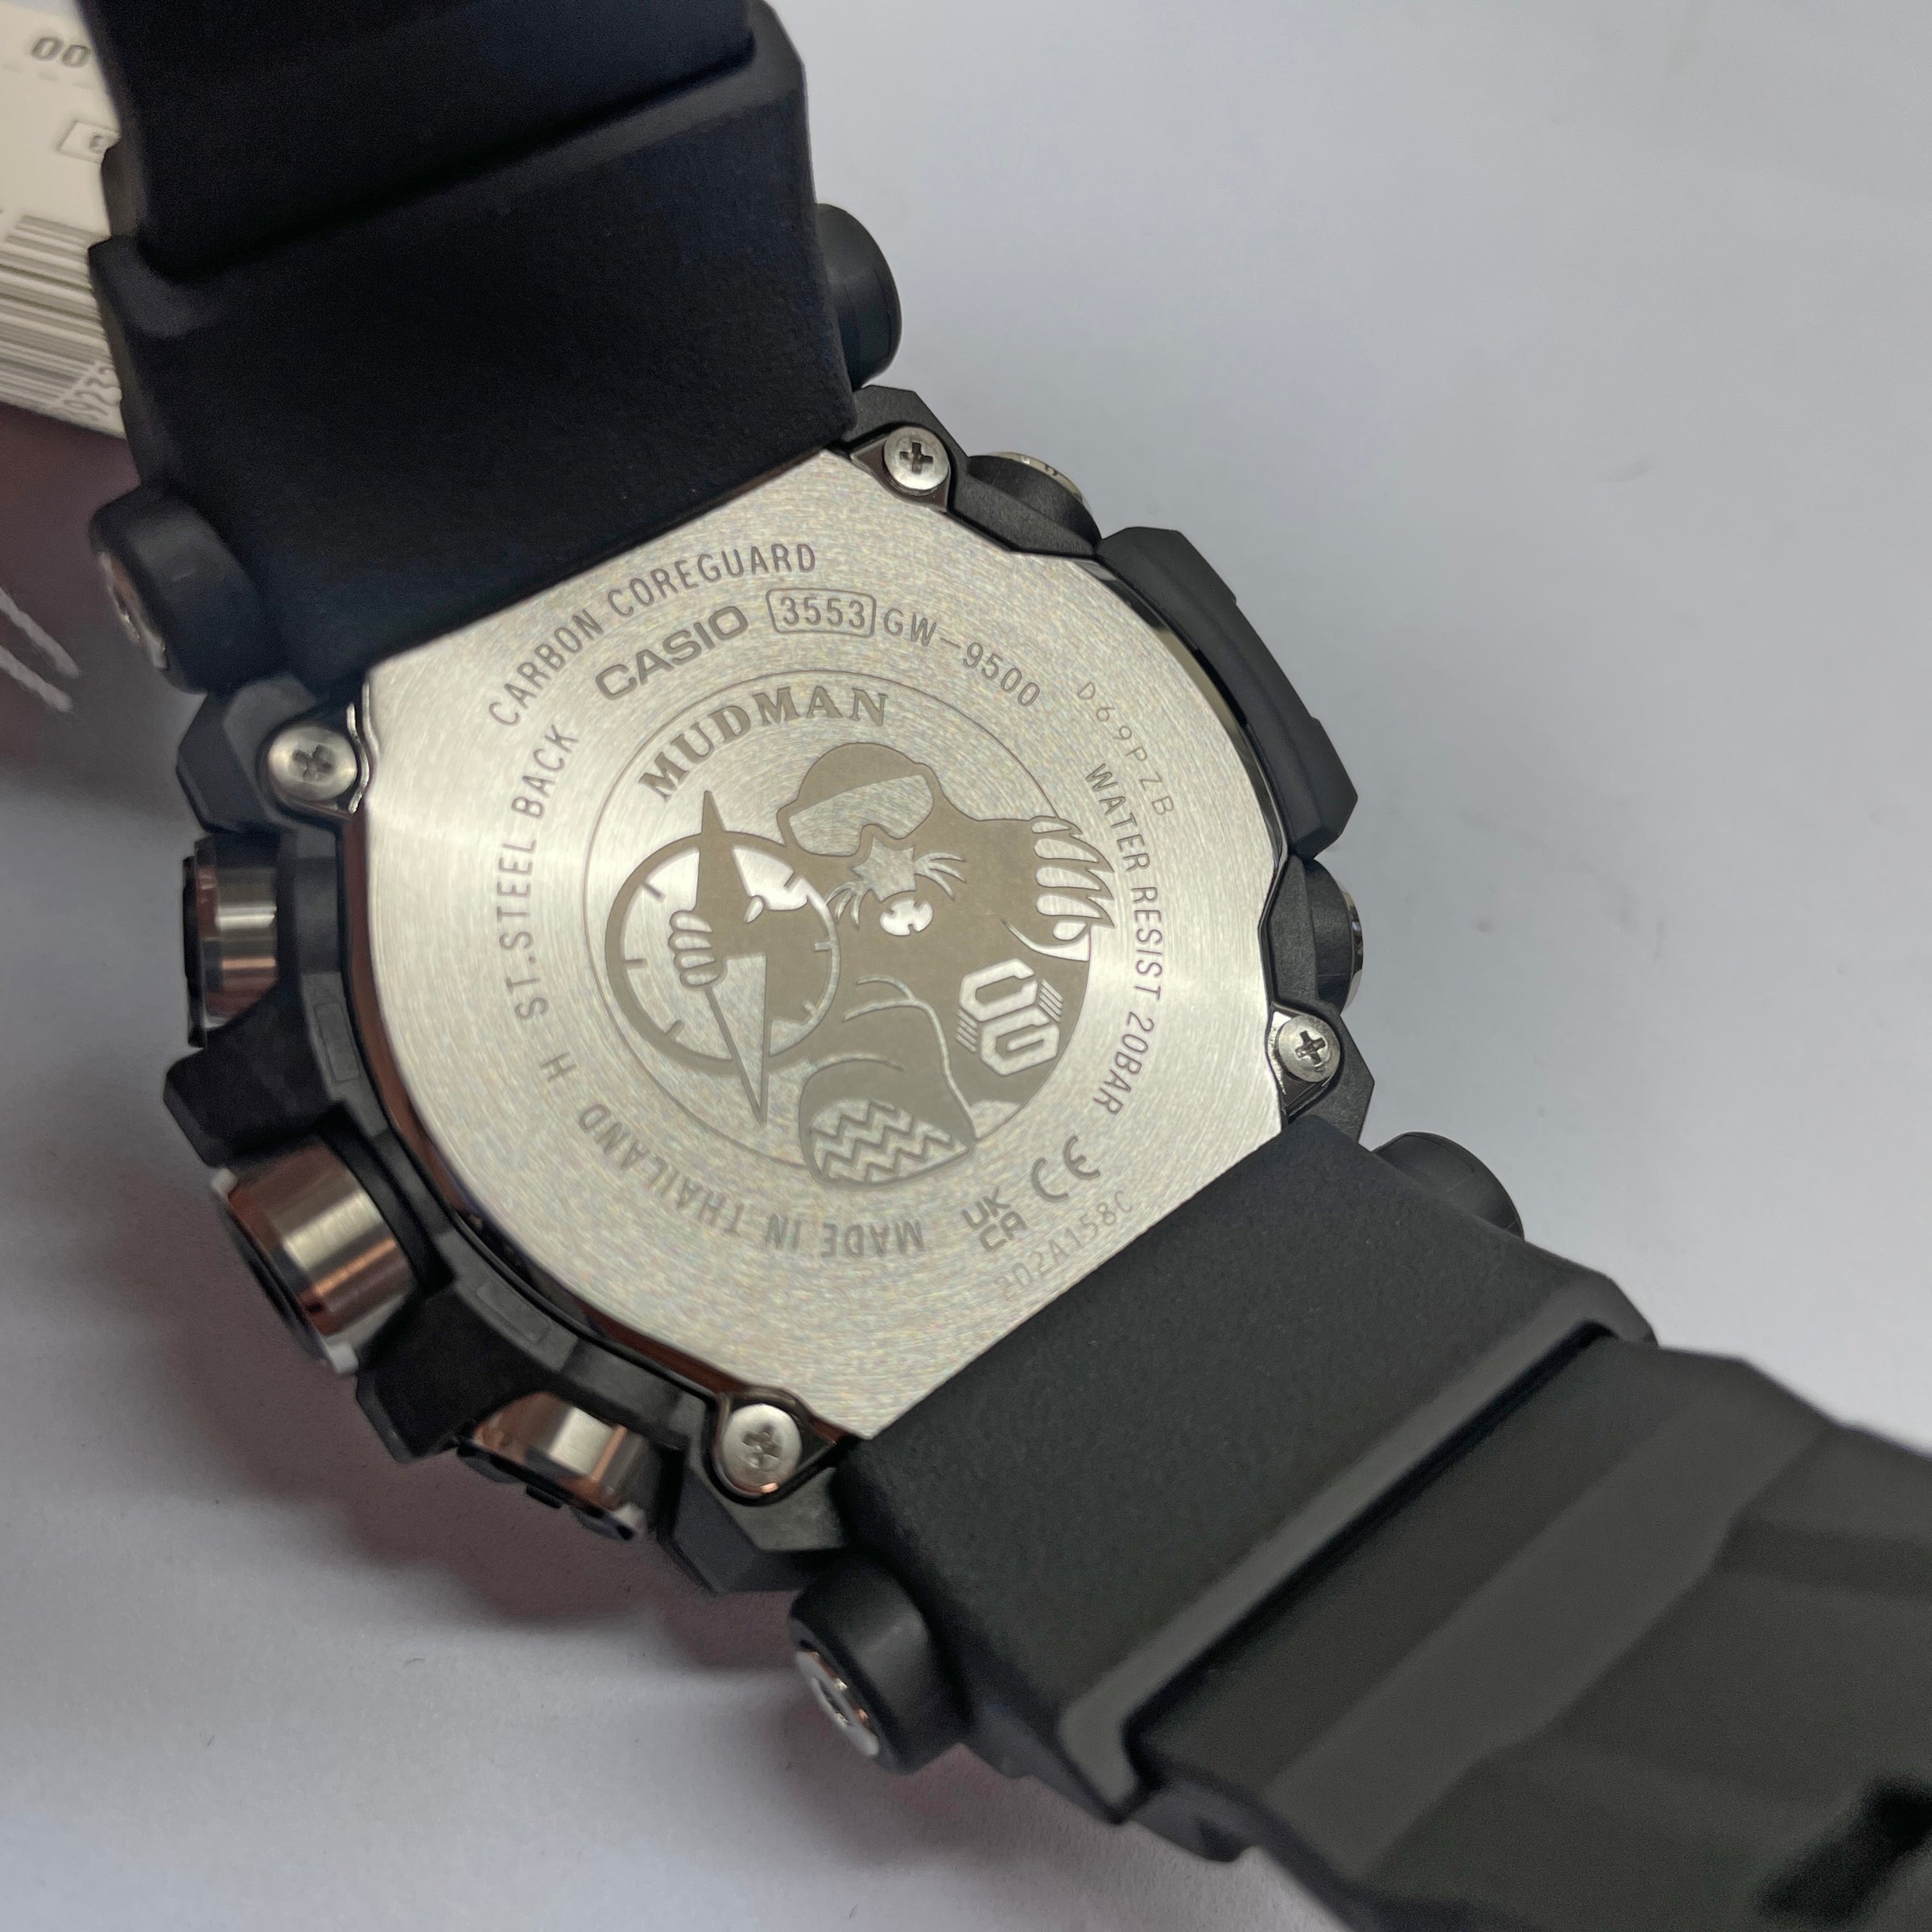 GW9500-1 | G-SHOCK Bold Black & Red Triple-Sensor Watch | CASIO